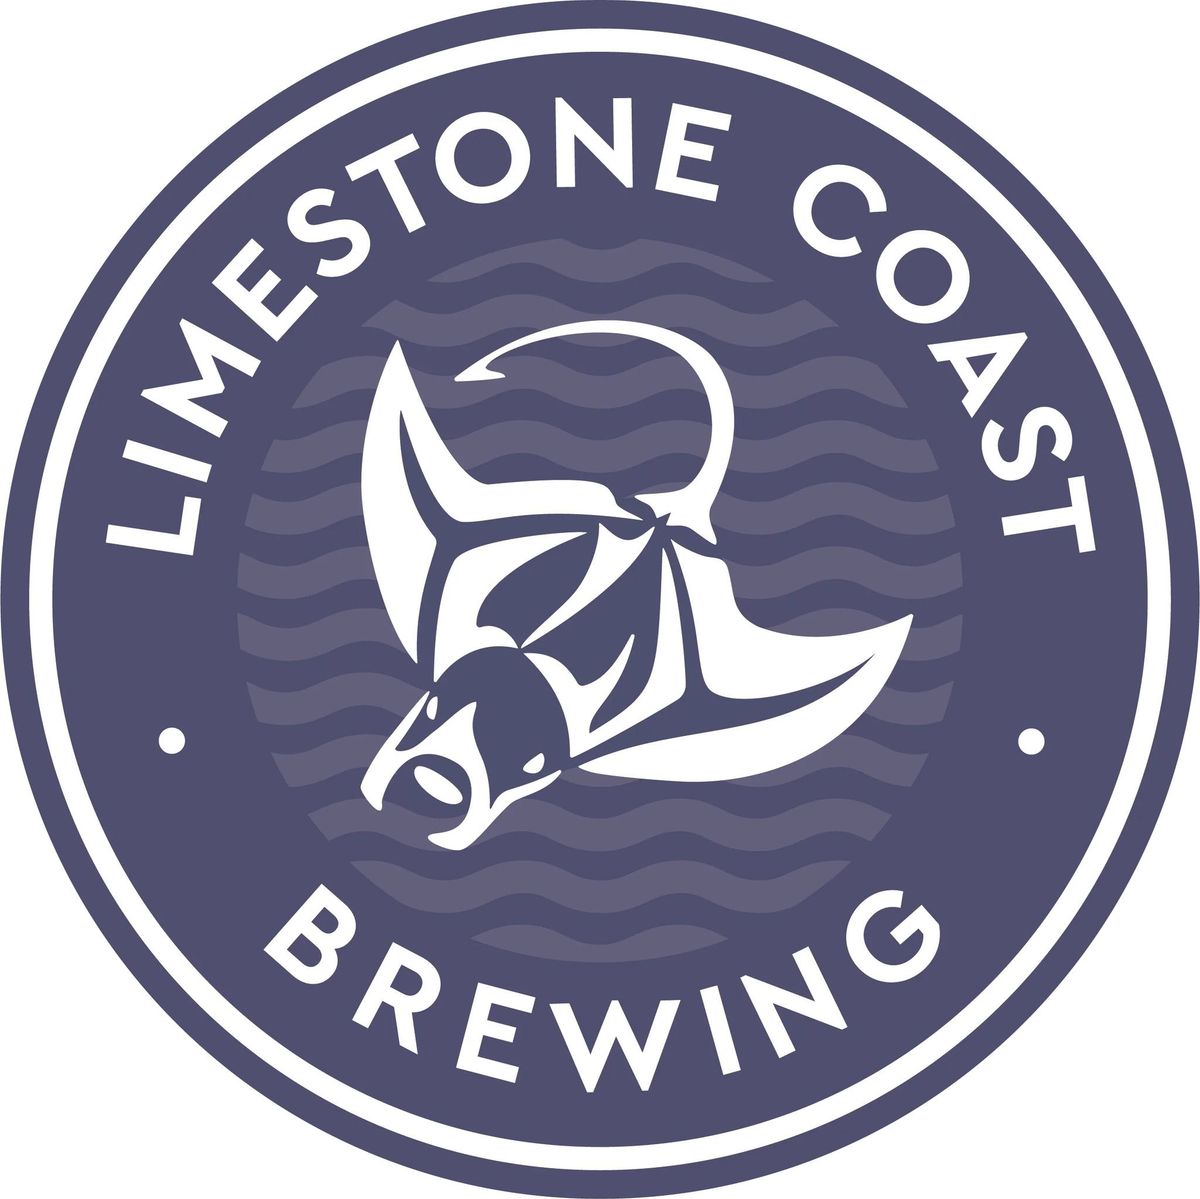 Cruise & dinnner at Limestone Coast Brewery